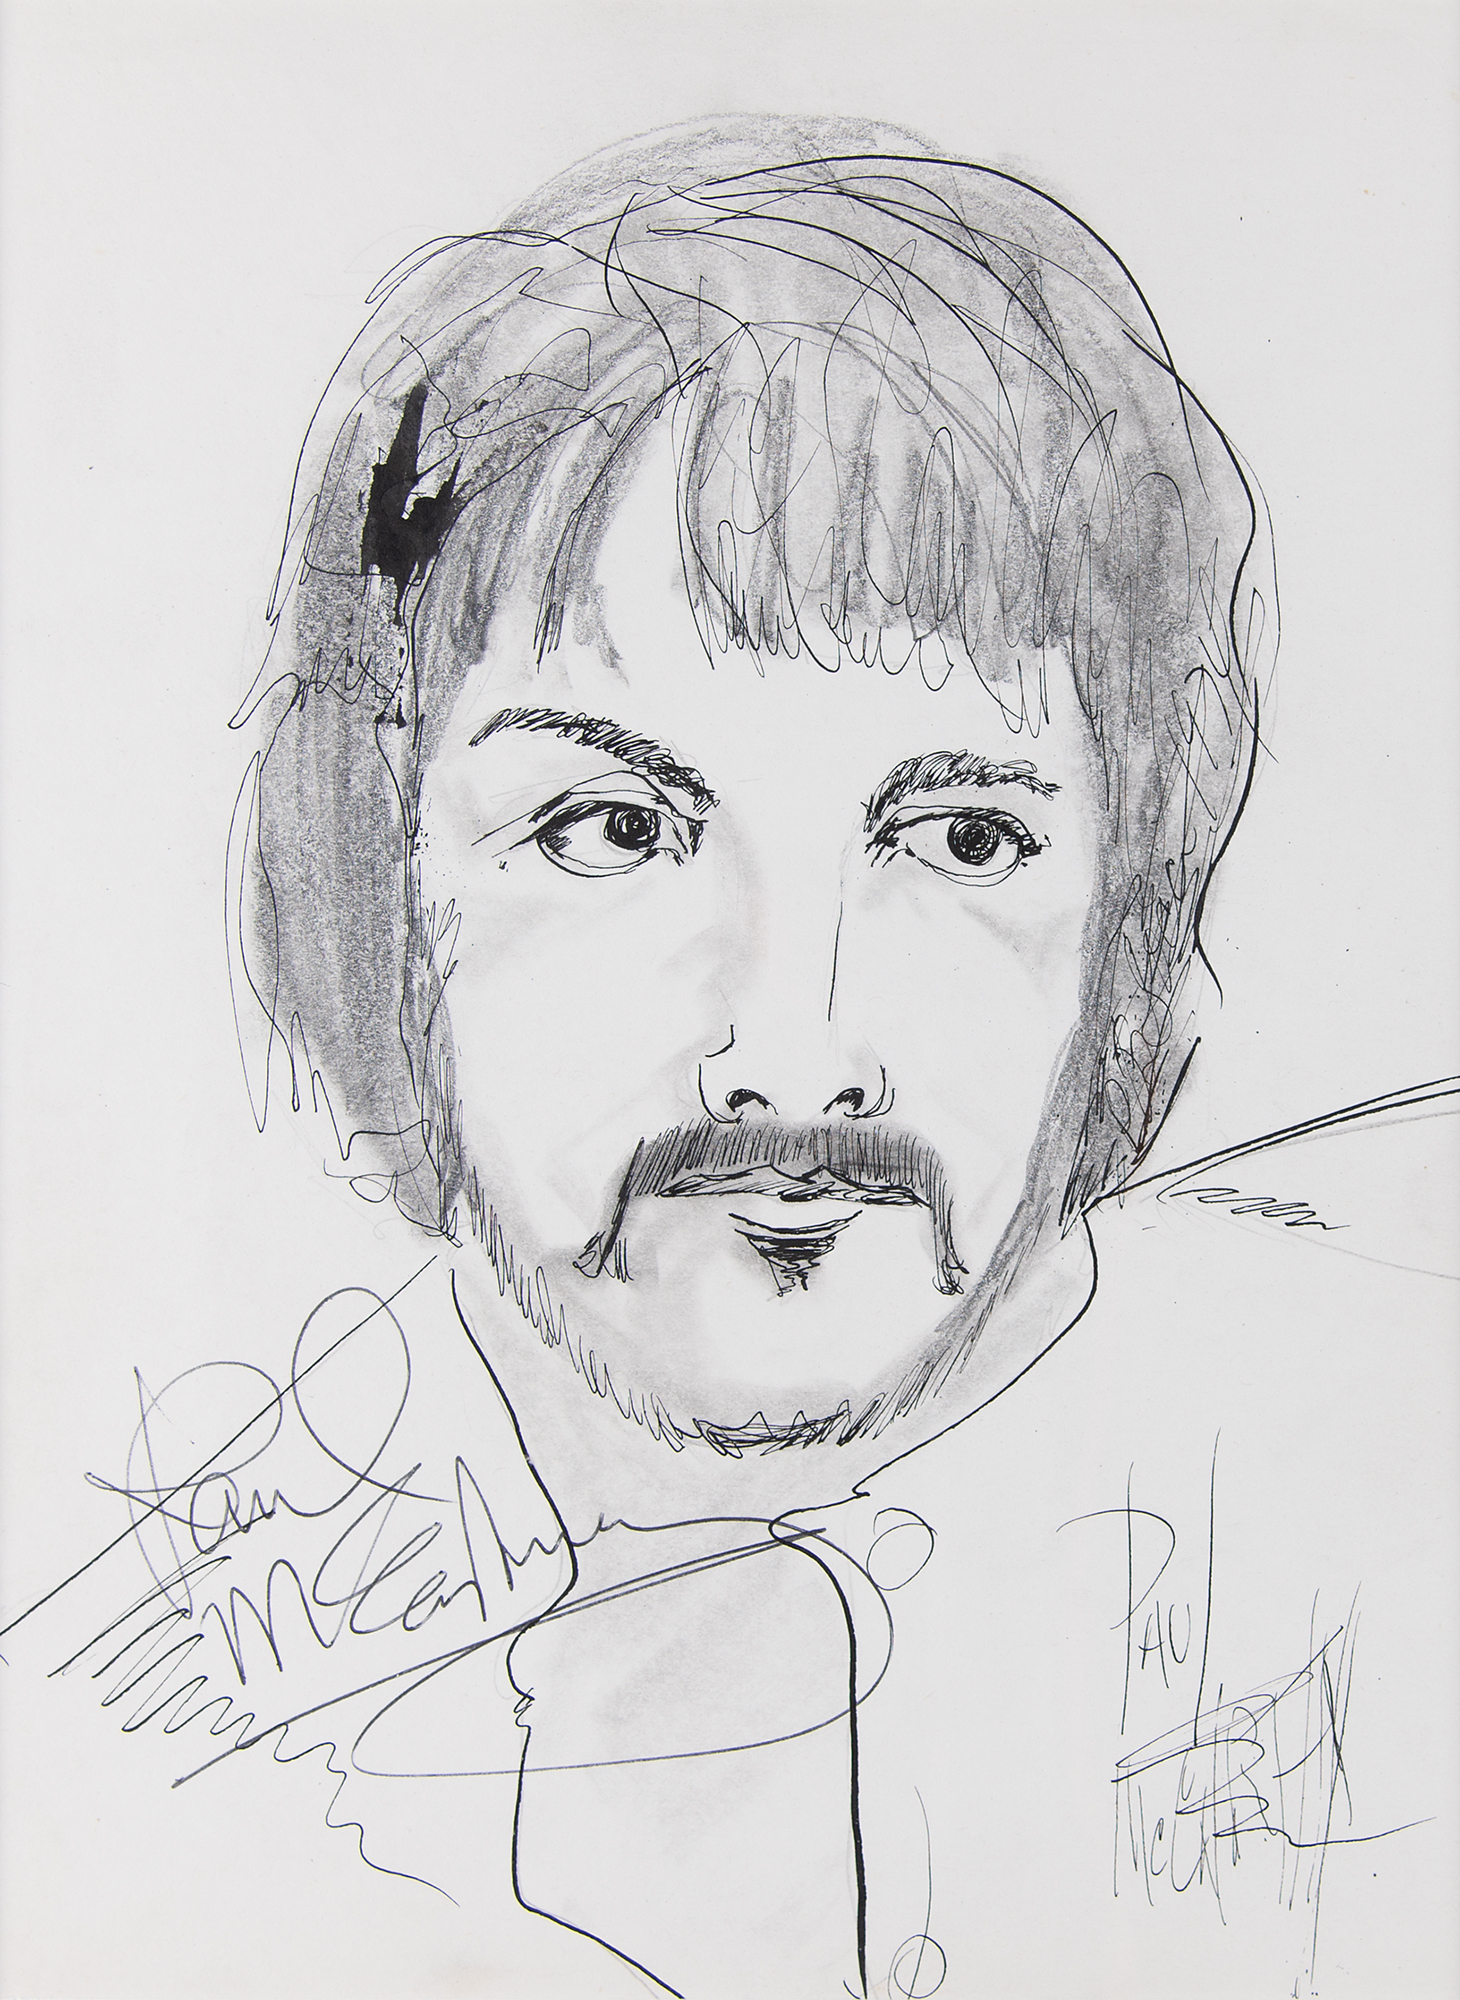 Beatles: John Lennon and Paul McCartney Signed Sketches | RR Auction